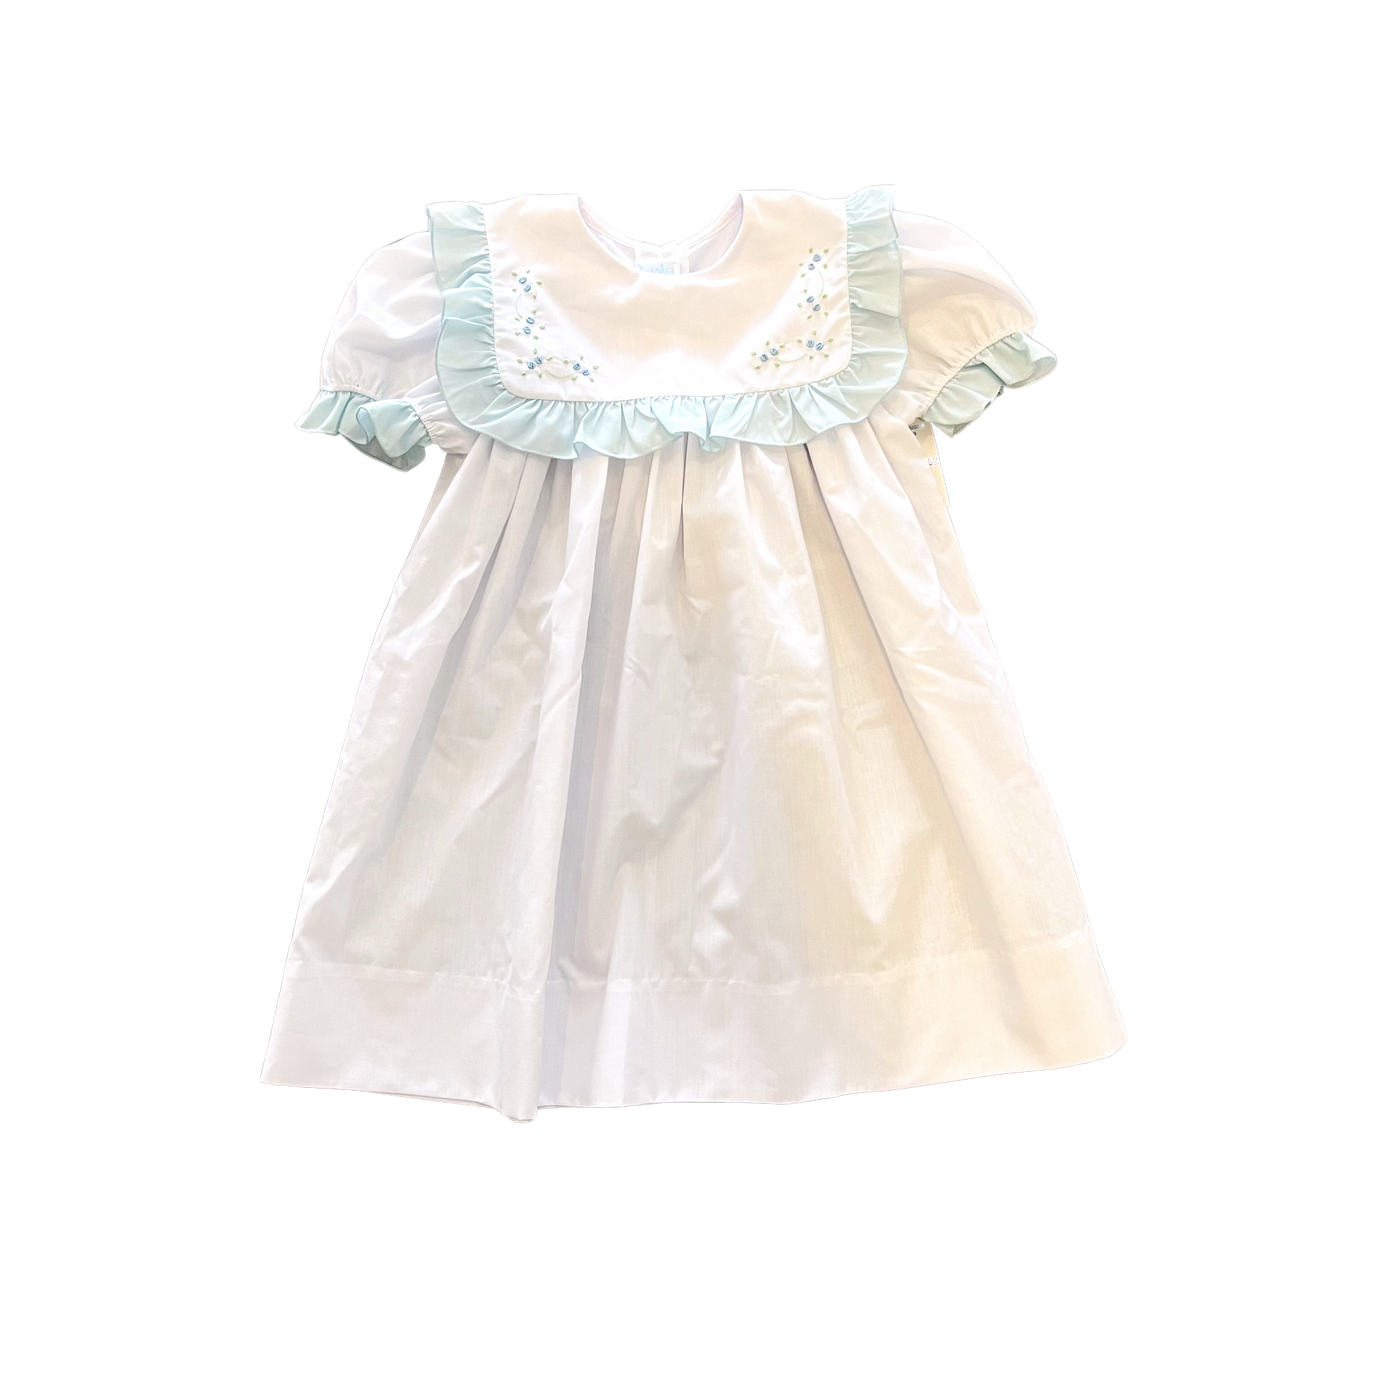 Rosebud Embroidered Ruffle Dress - White/Blue